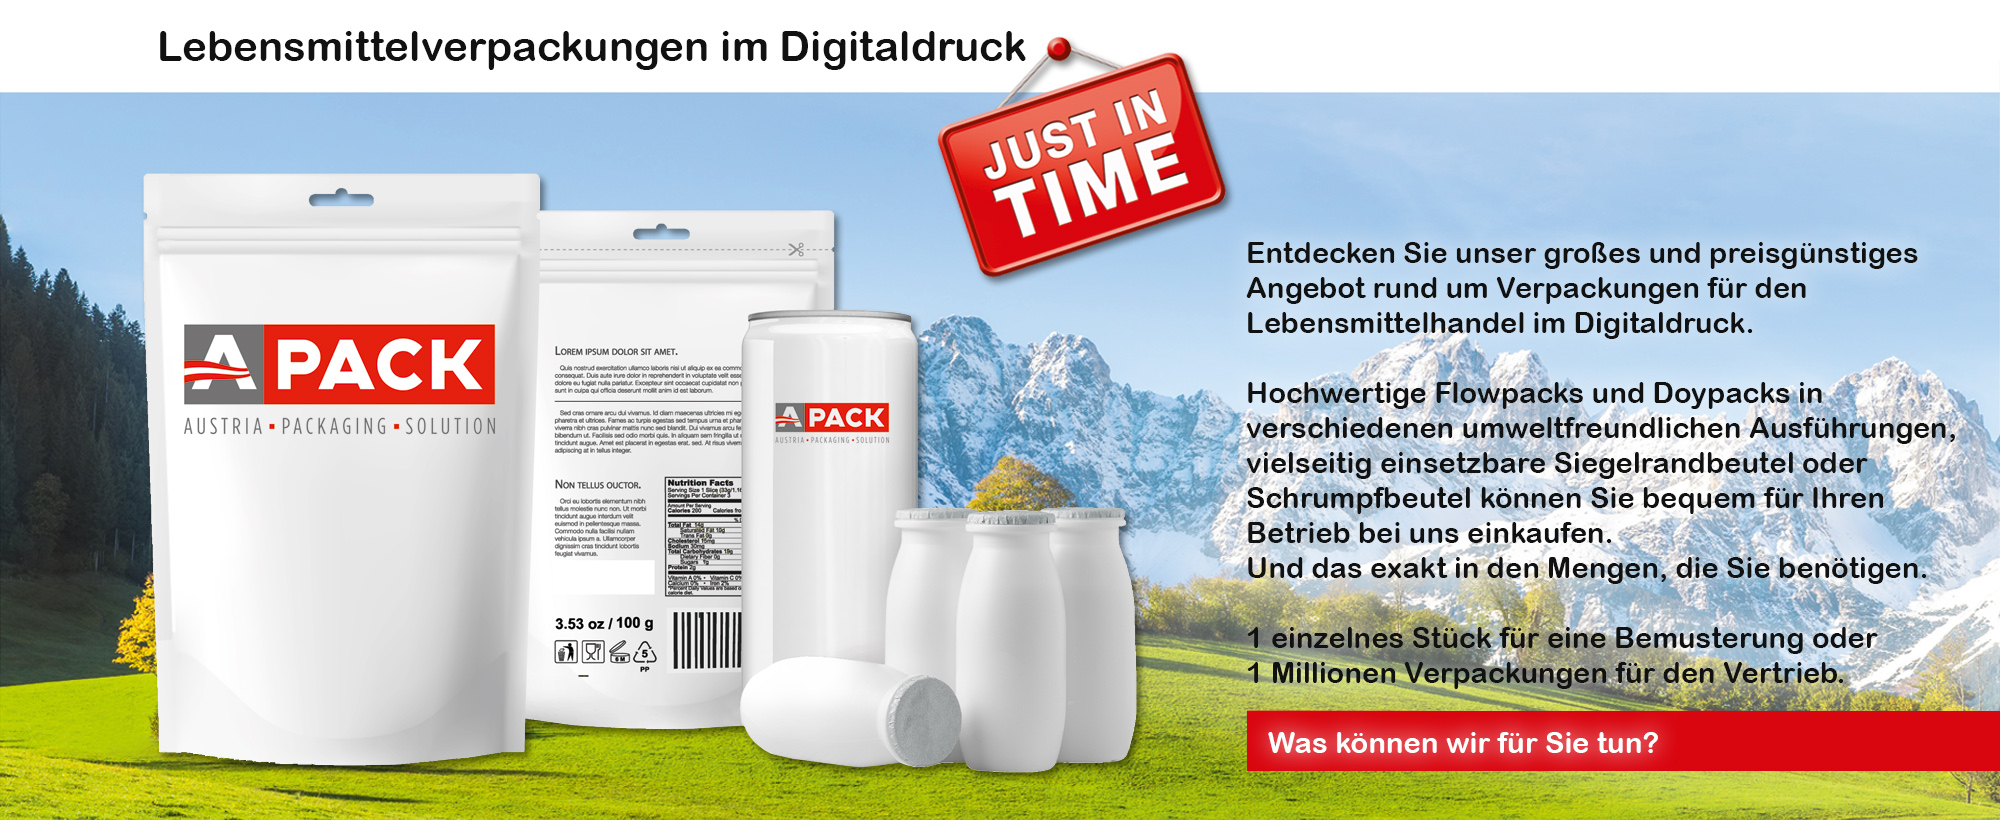 Austria Packaging Solution Digitaldruck Lebensmittelverpackungen